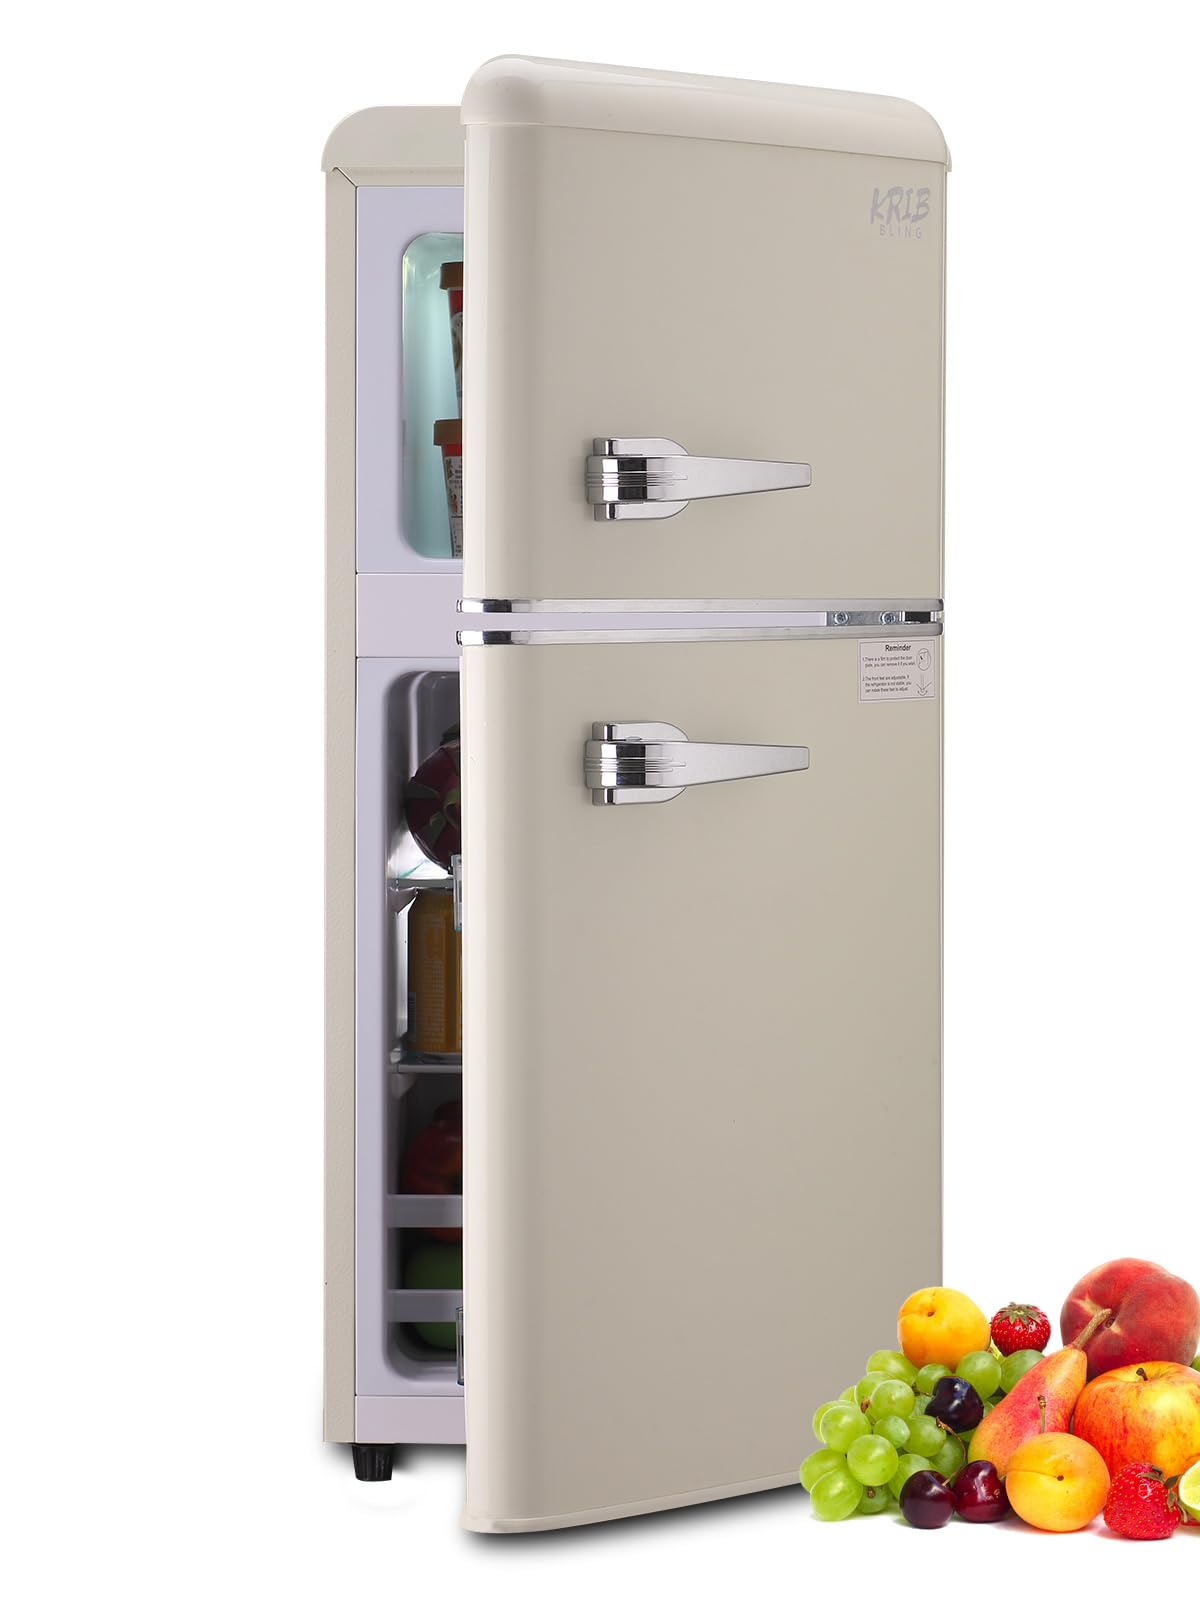 KRIB BLING Retro Refrigerator with Freezer 3.5 Cu.Ft with 7 Level Adjustable Thermostat Control 2 Door Energy Saving Top-Freezer Compact Refrigerator Cream